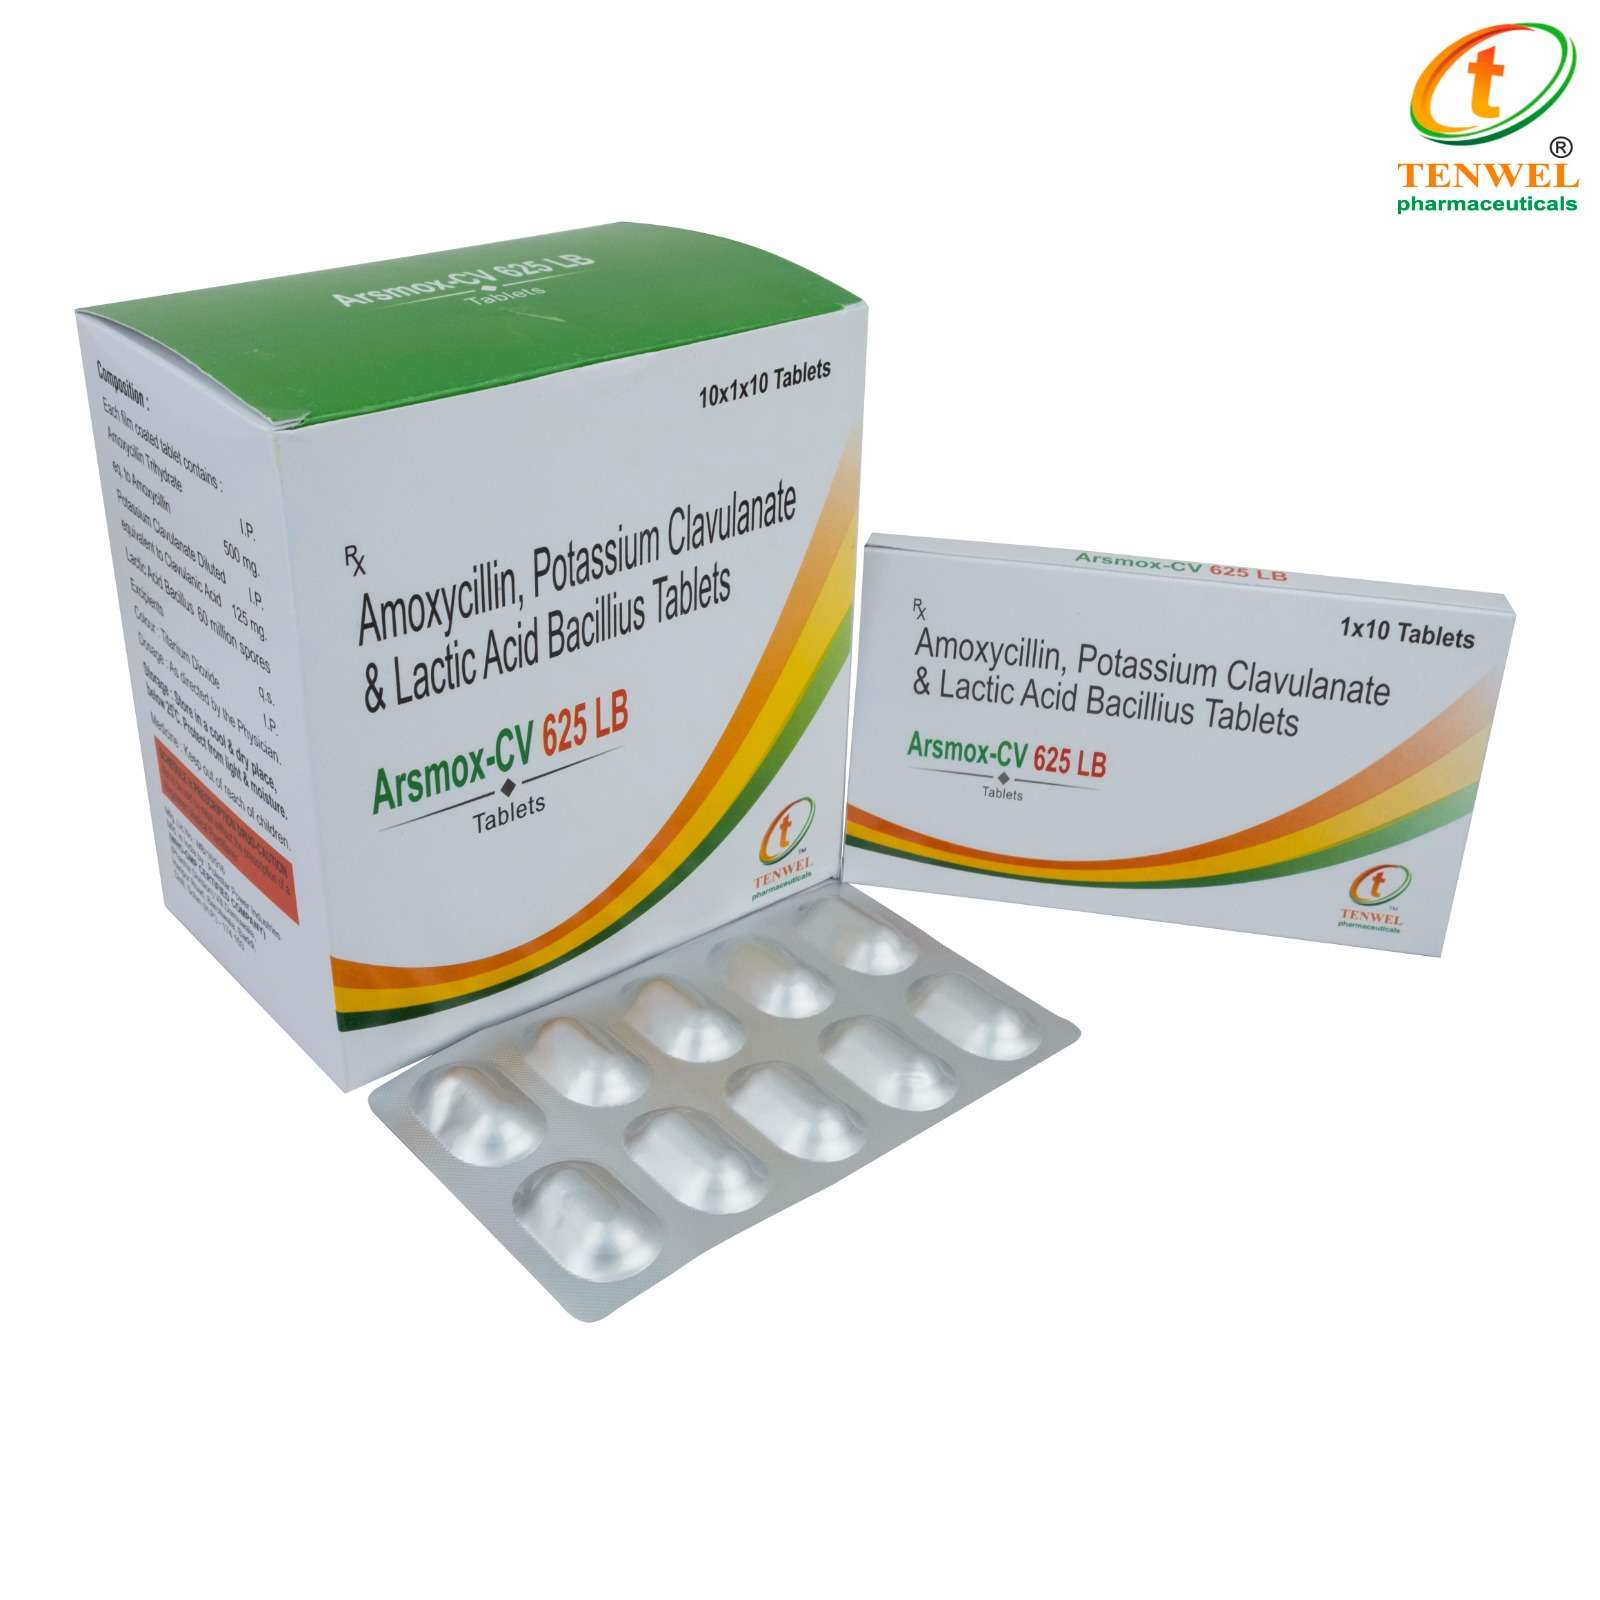 amoxycillin 500mg + potassium clavulanate 125mg & lactic acid bacillus tablets